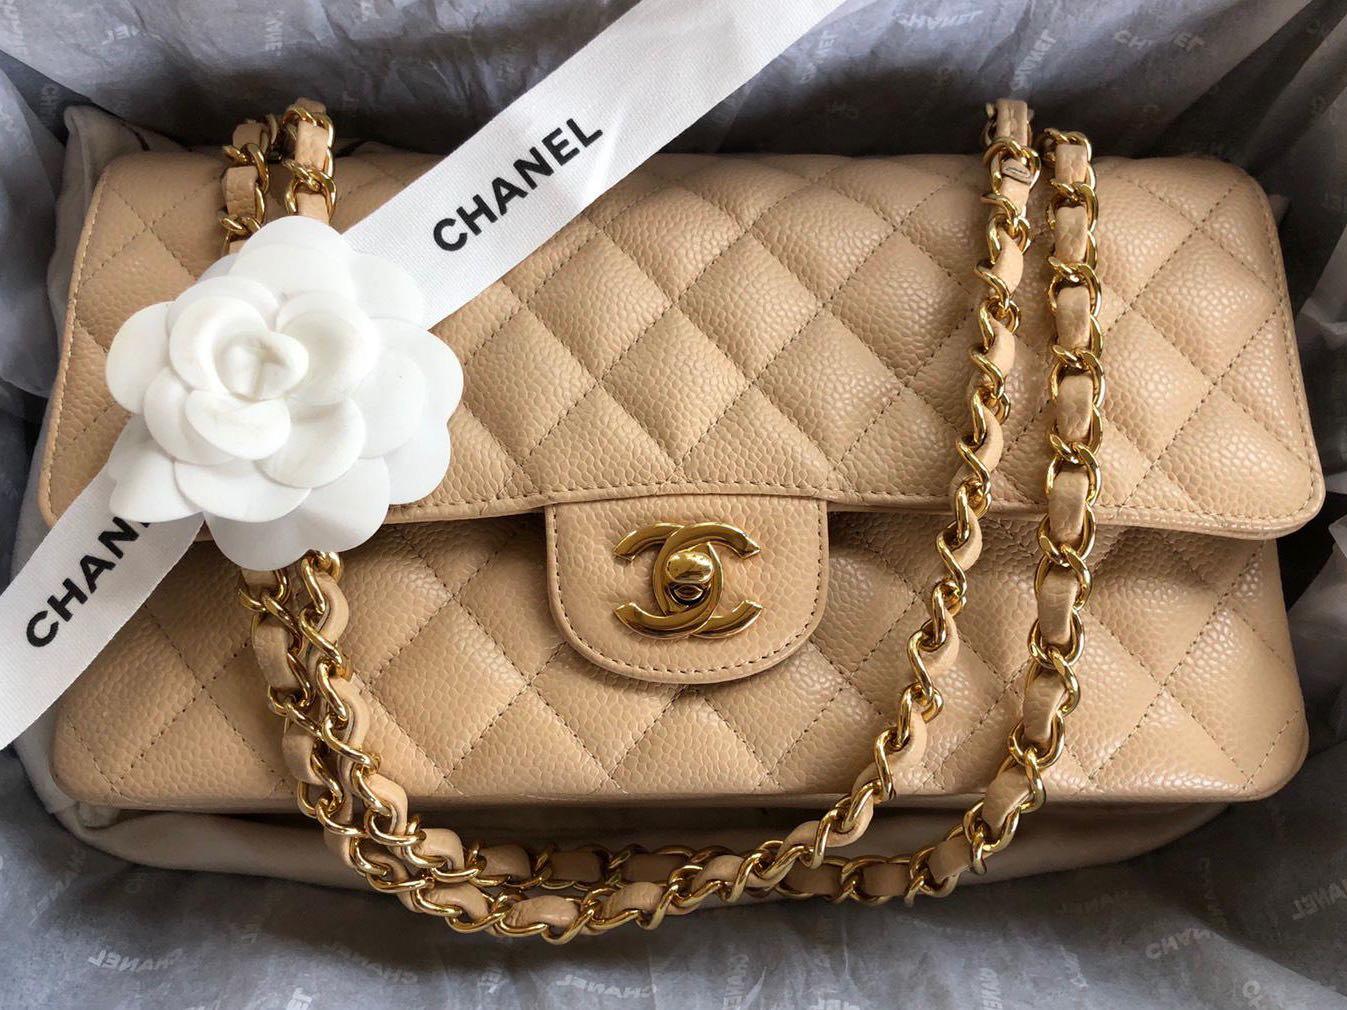 Chanel classic medium beige Clair caviar with ghw